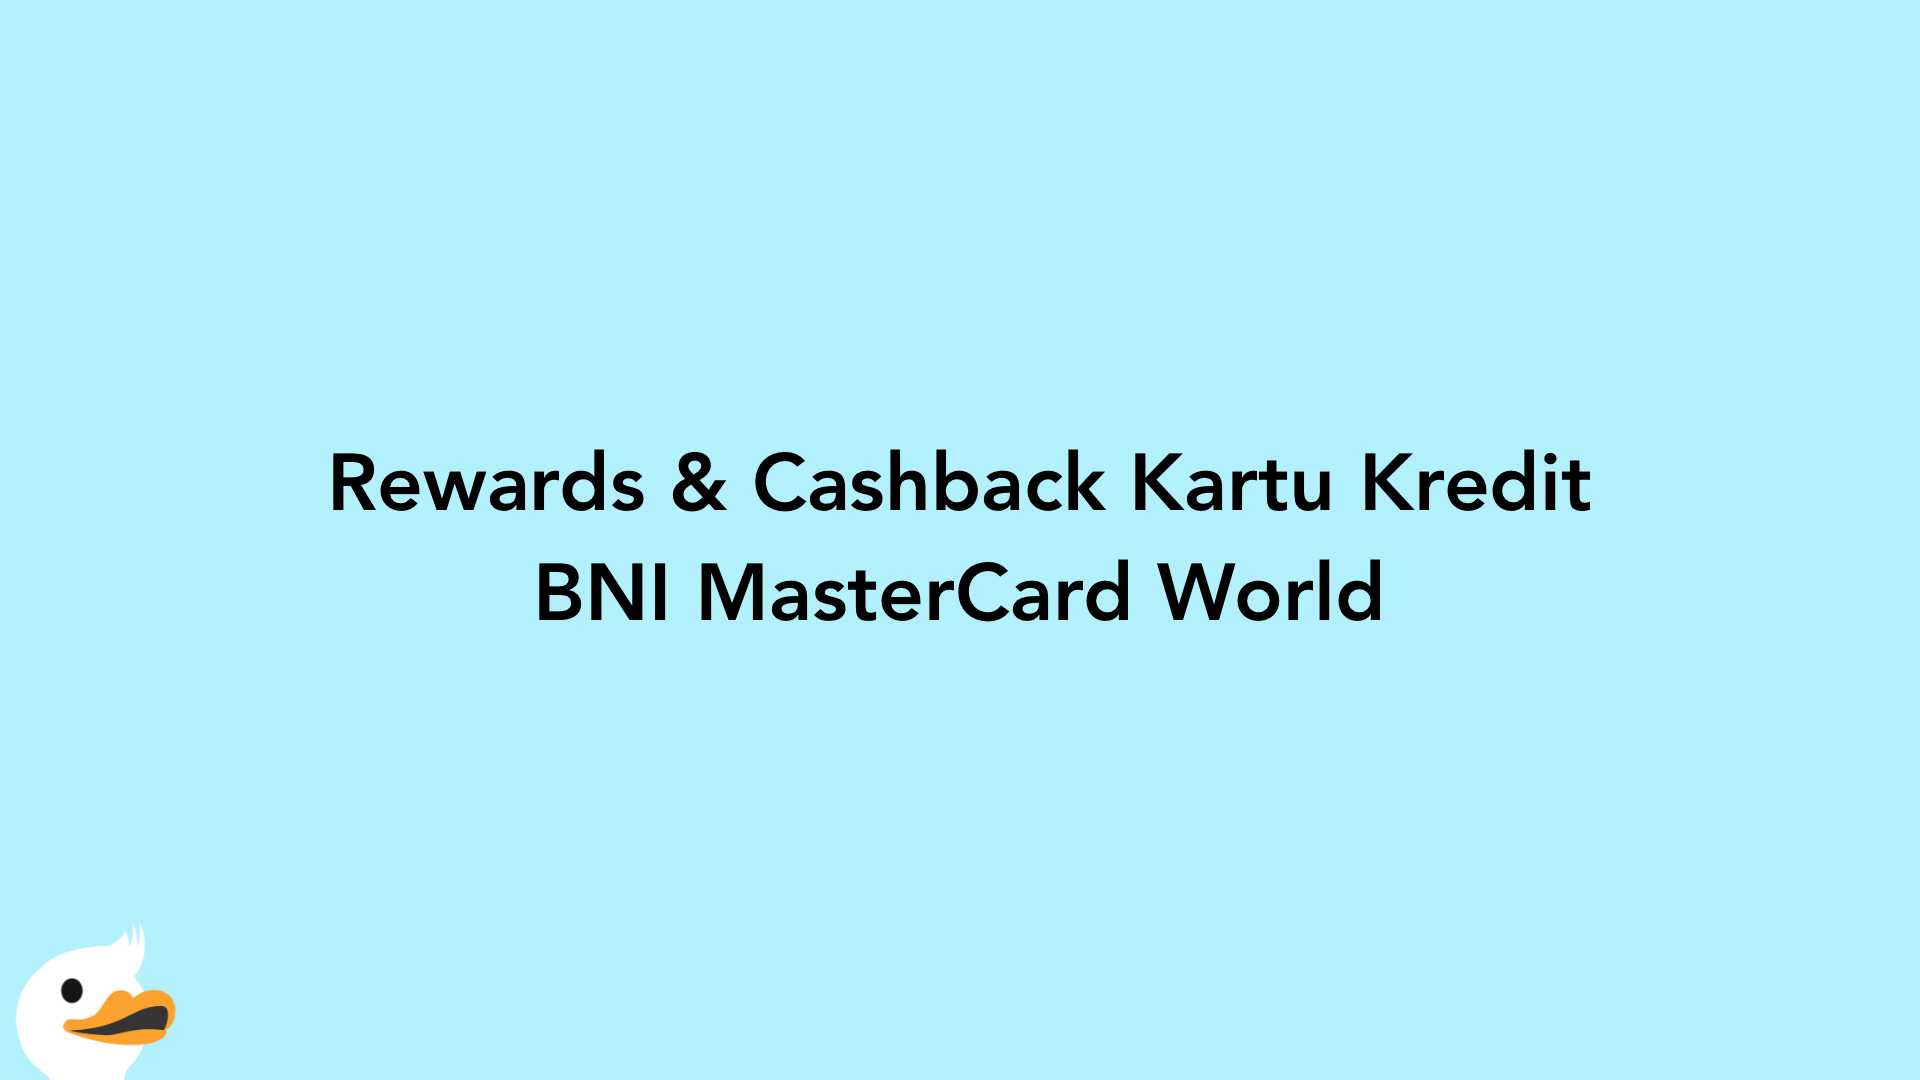 Rewards & Cashback Kartu Kredit BNI MasterCard World